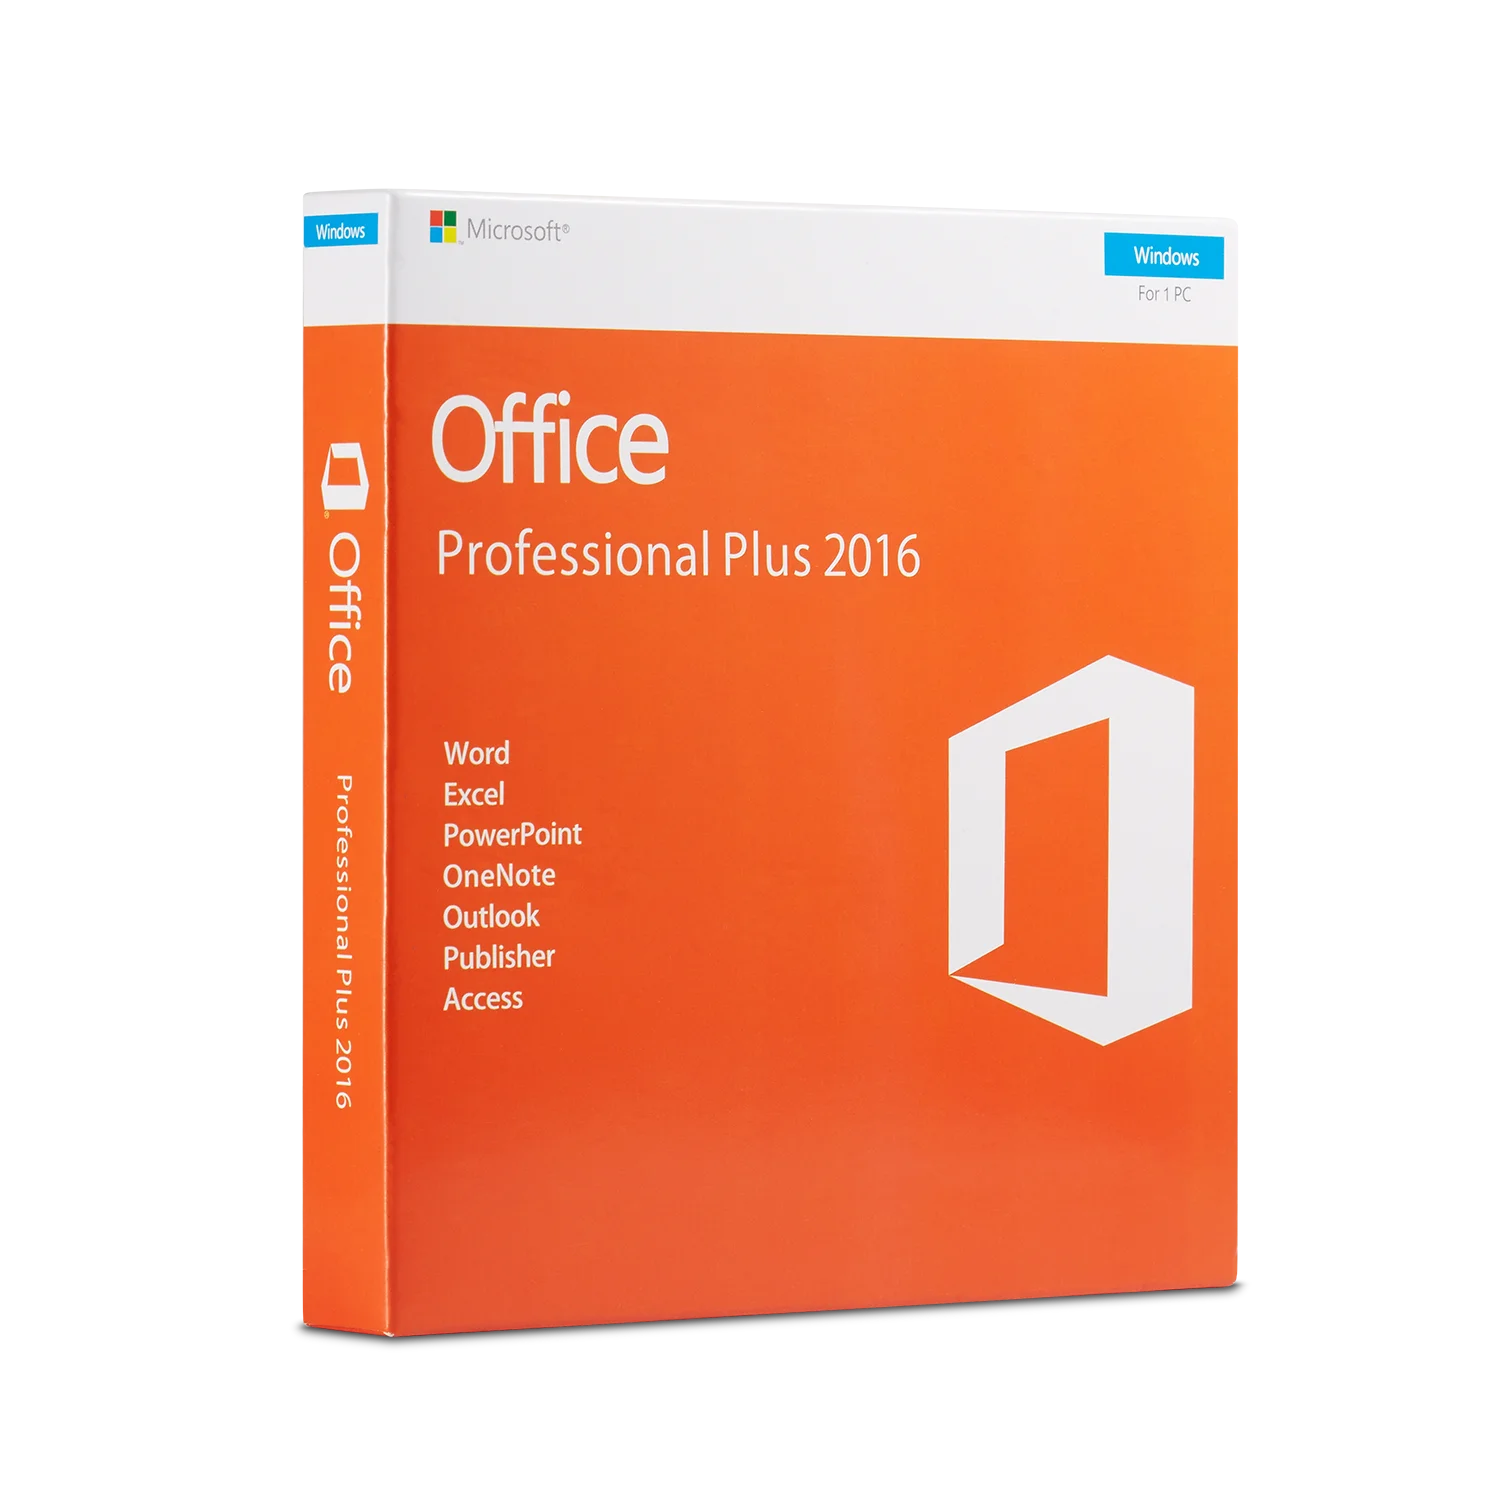 Microsoft Office 2016 professional Plus. Microsoft professional Plus 2016. Microsoft Office 2016 Home and Business. Office 2019 Pro Plus Box.